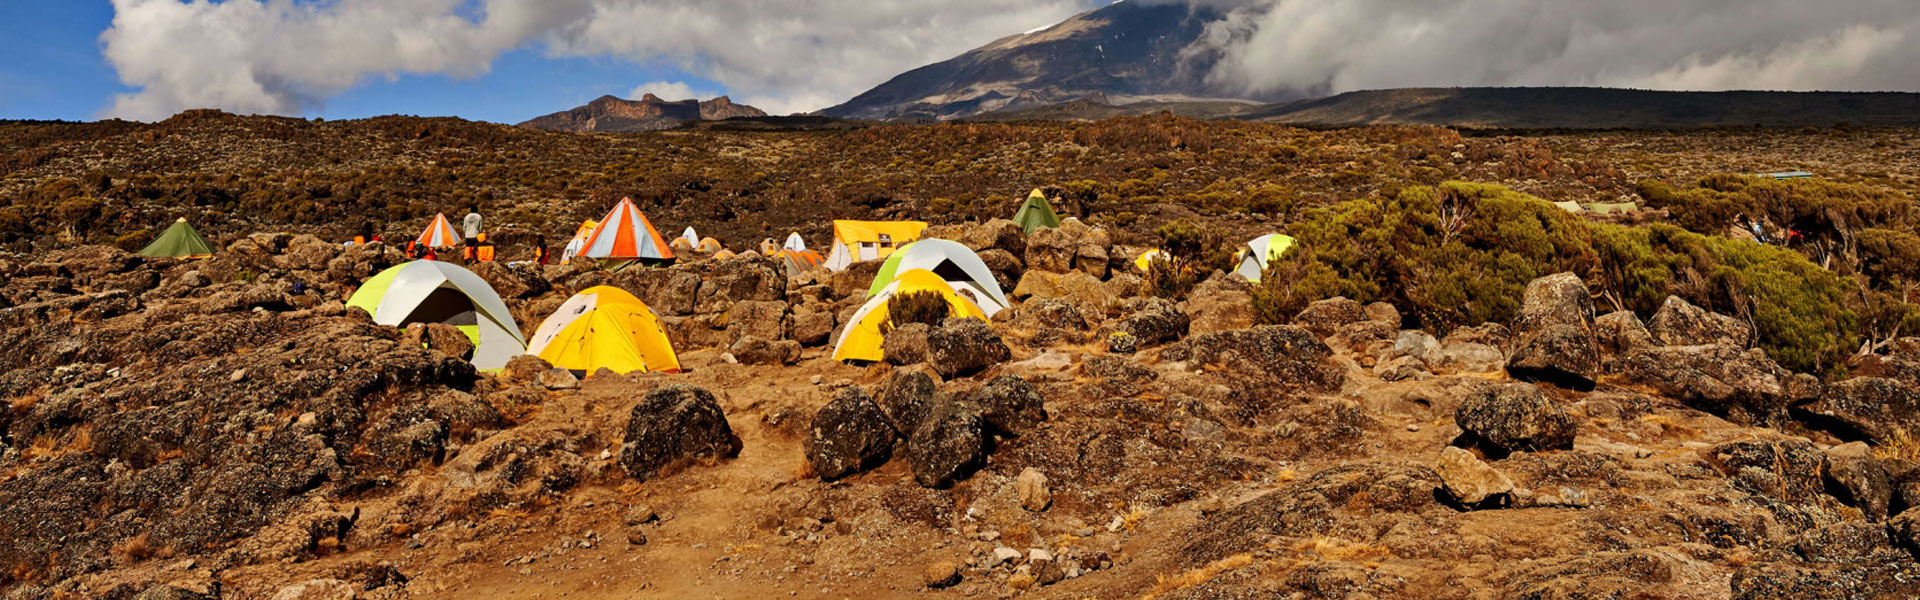 Kilimanjaro FAQs